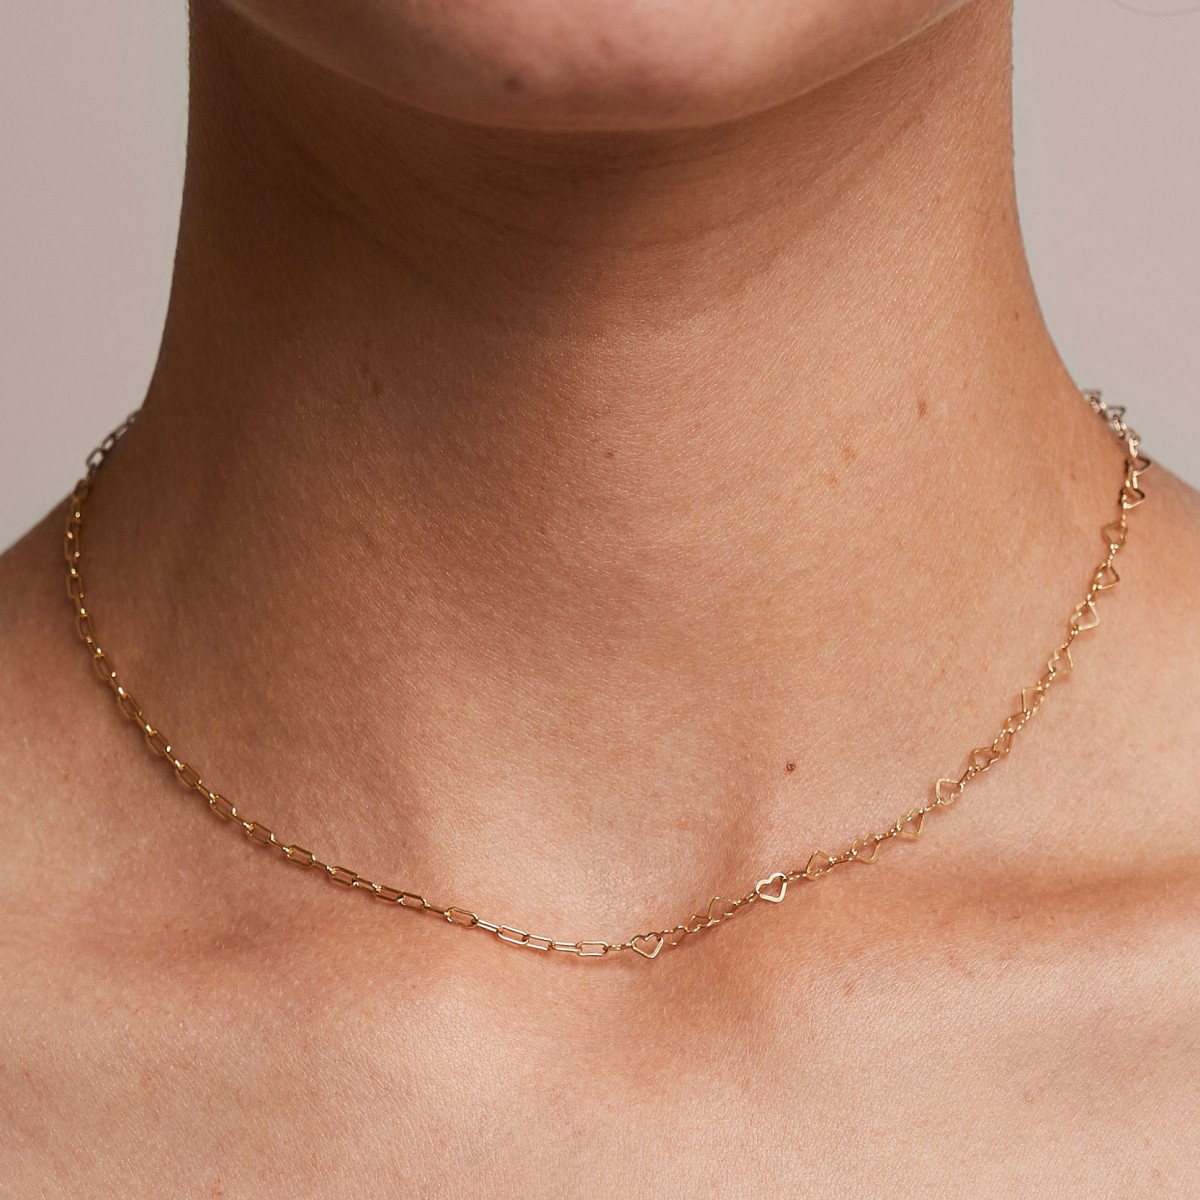 just hearts necklace - 925 Sterlingsilber 18k goldplattiert